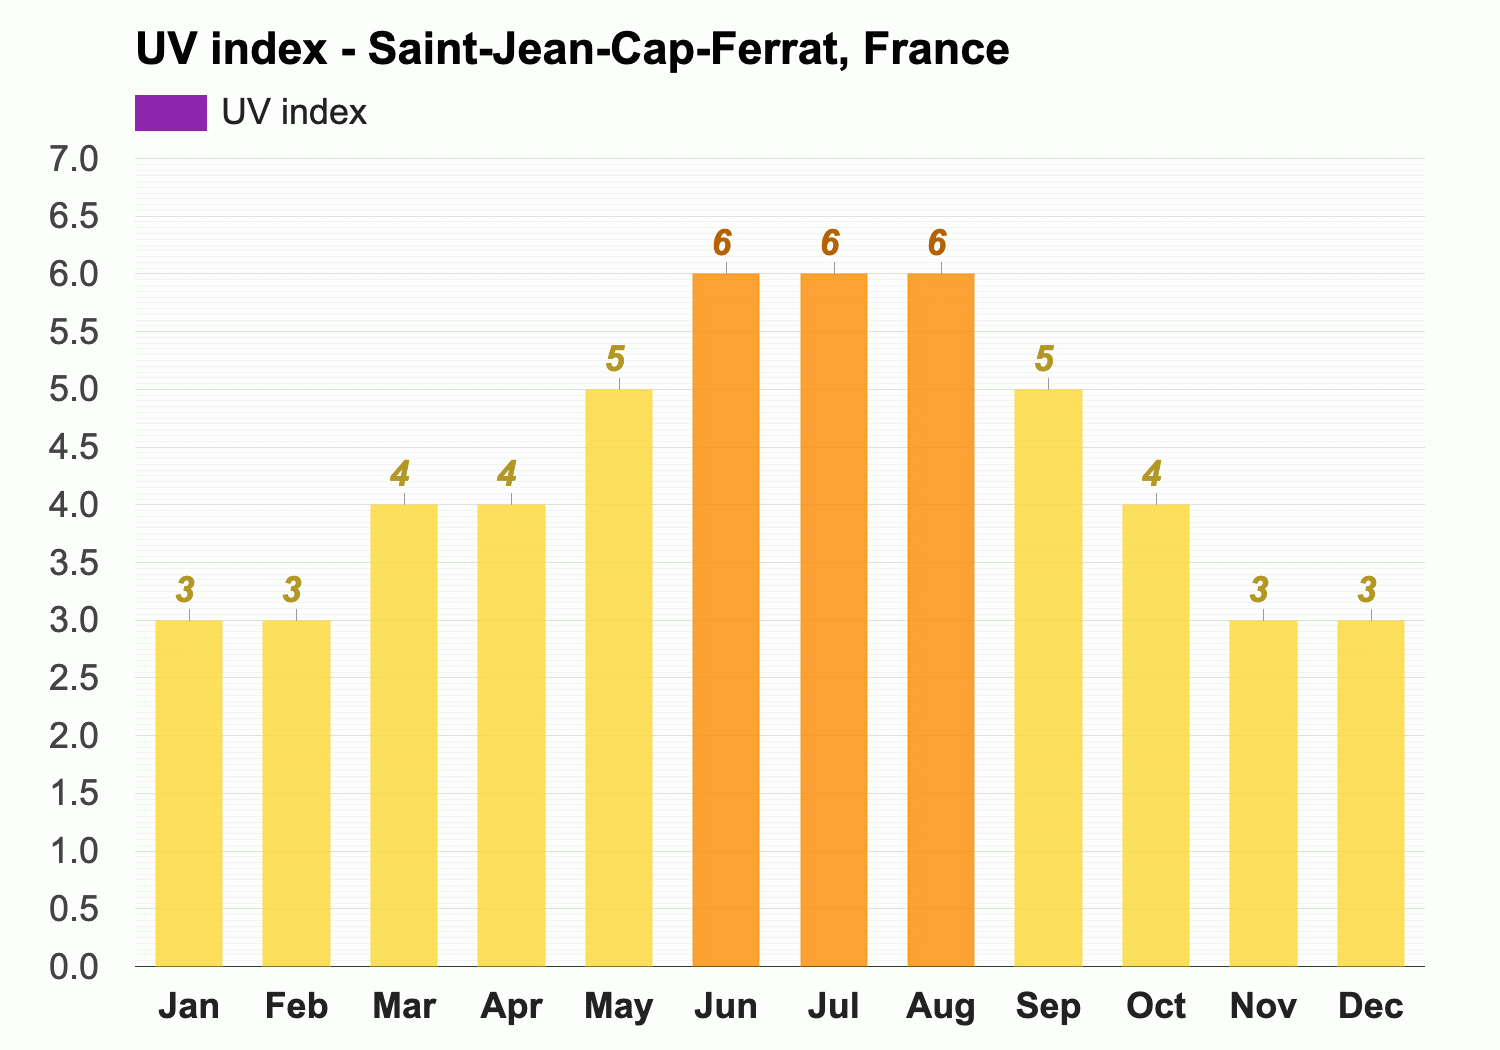 Saint-Jean-Cap-Ferrat, France - August weather forecast and climate  information | Weather Atlas